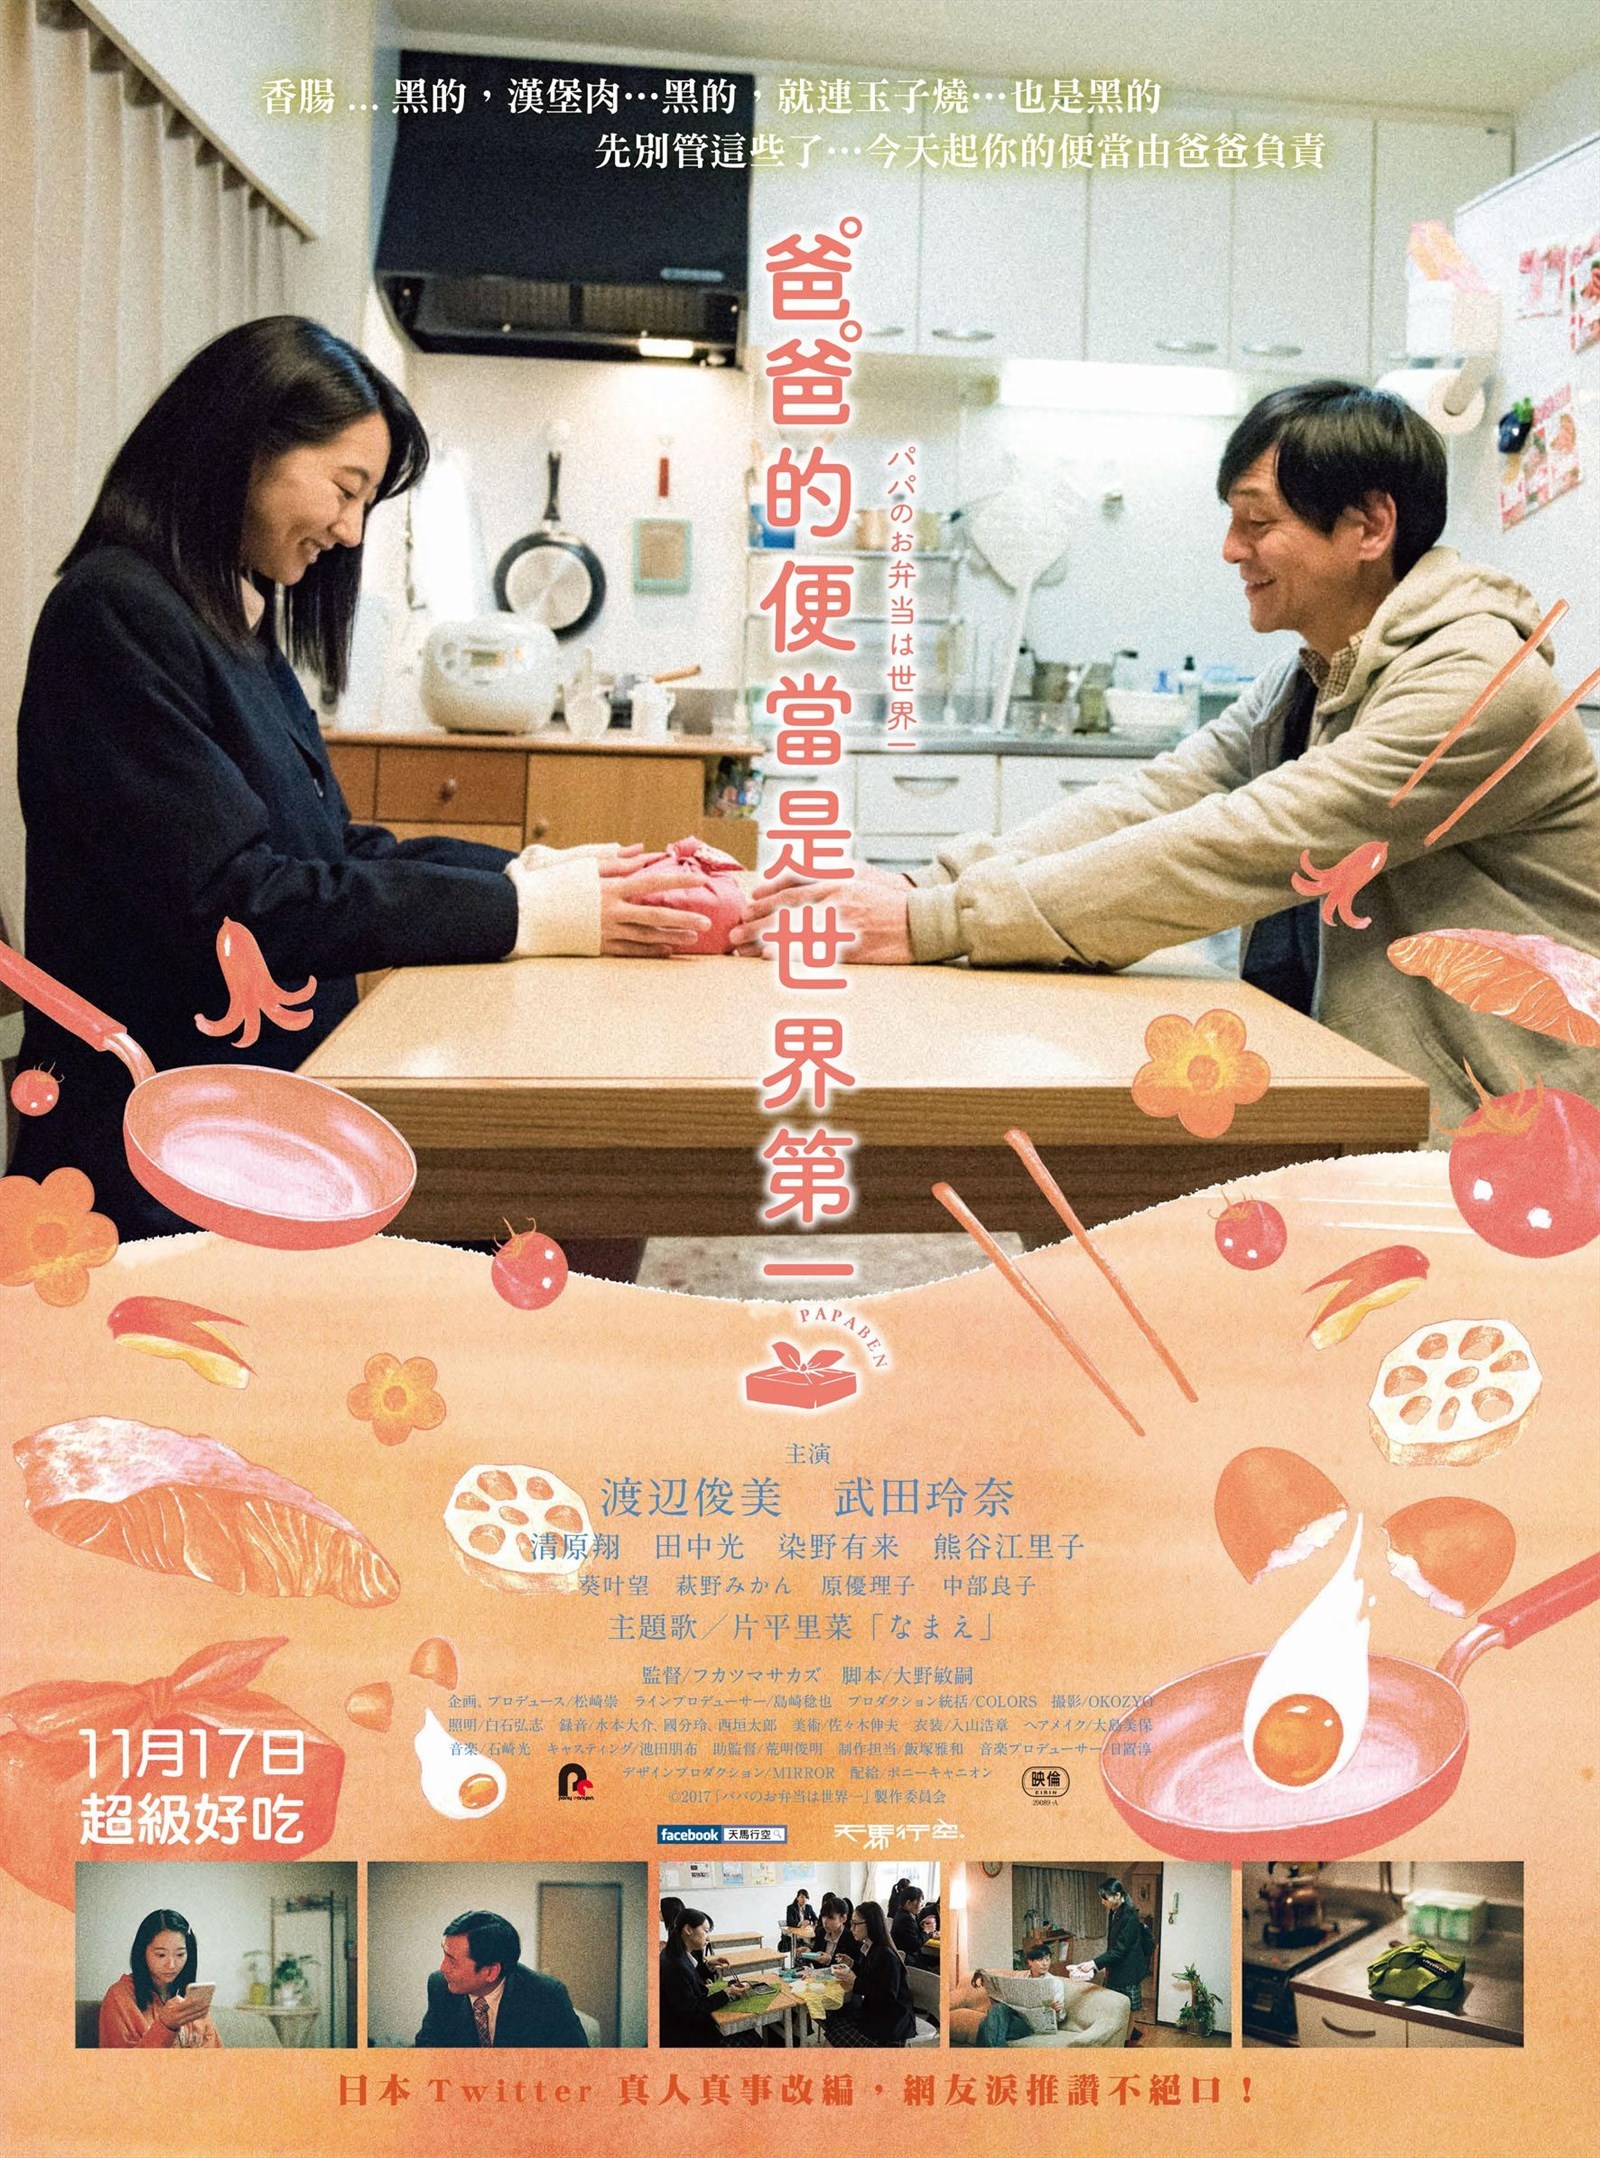 Openrice線上訂位 請你看電影 爸爸的便當是世界第一 感動全日本的真實故事 Openrice Taiwan